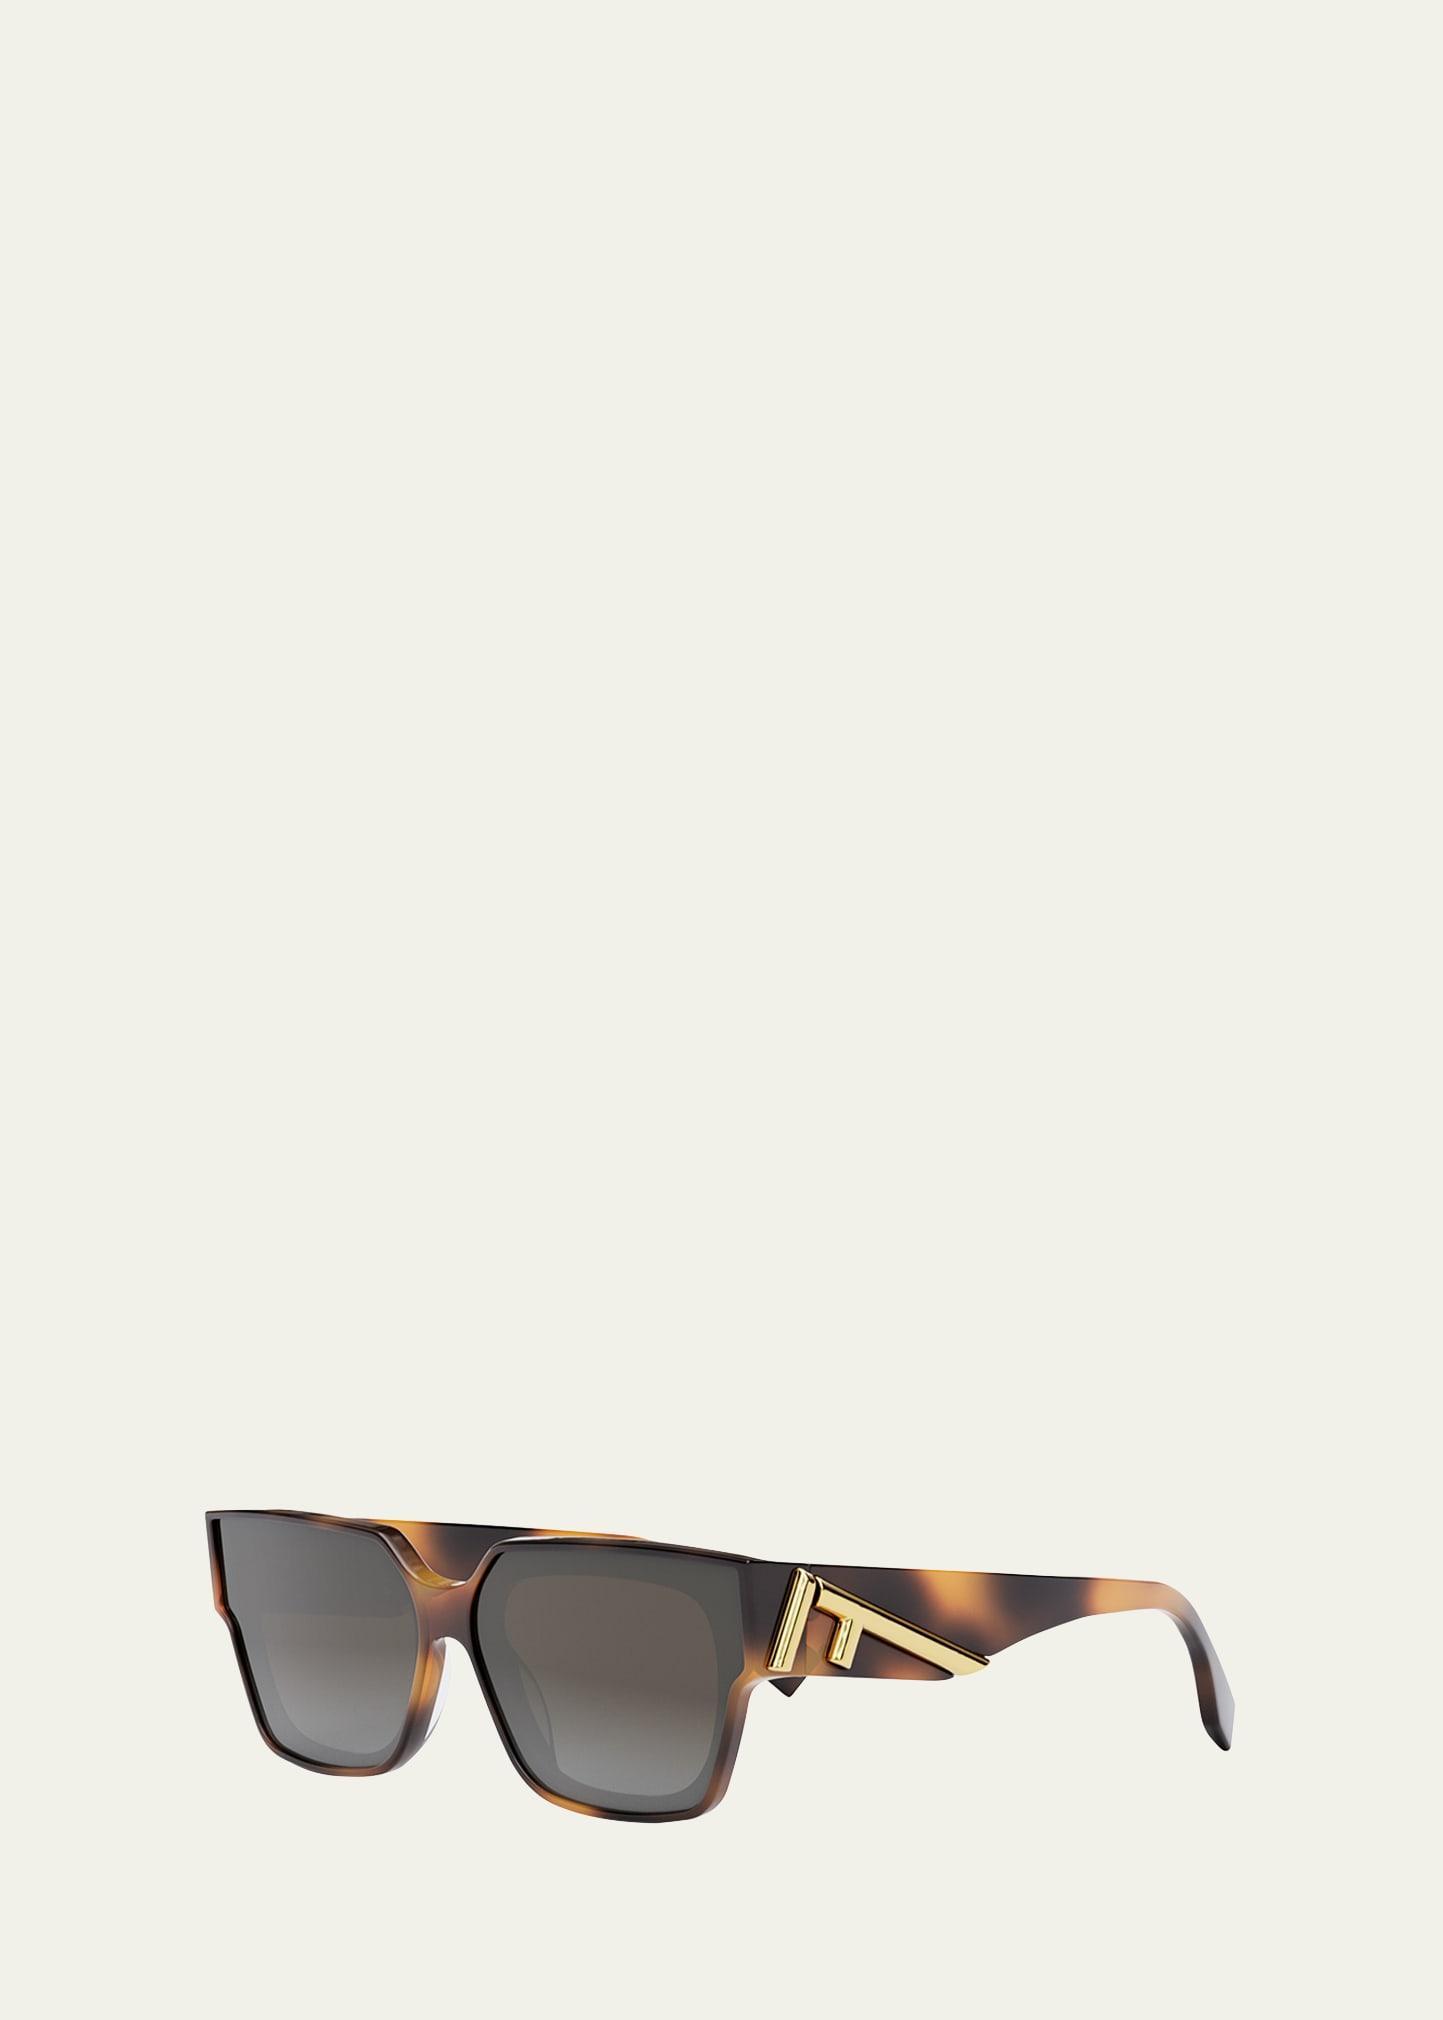 The Fendi First Rectangular Sunglasses Product Image